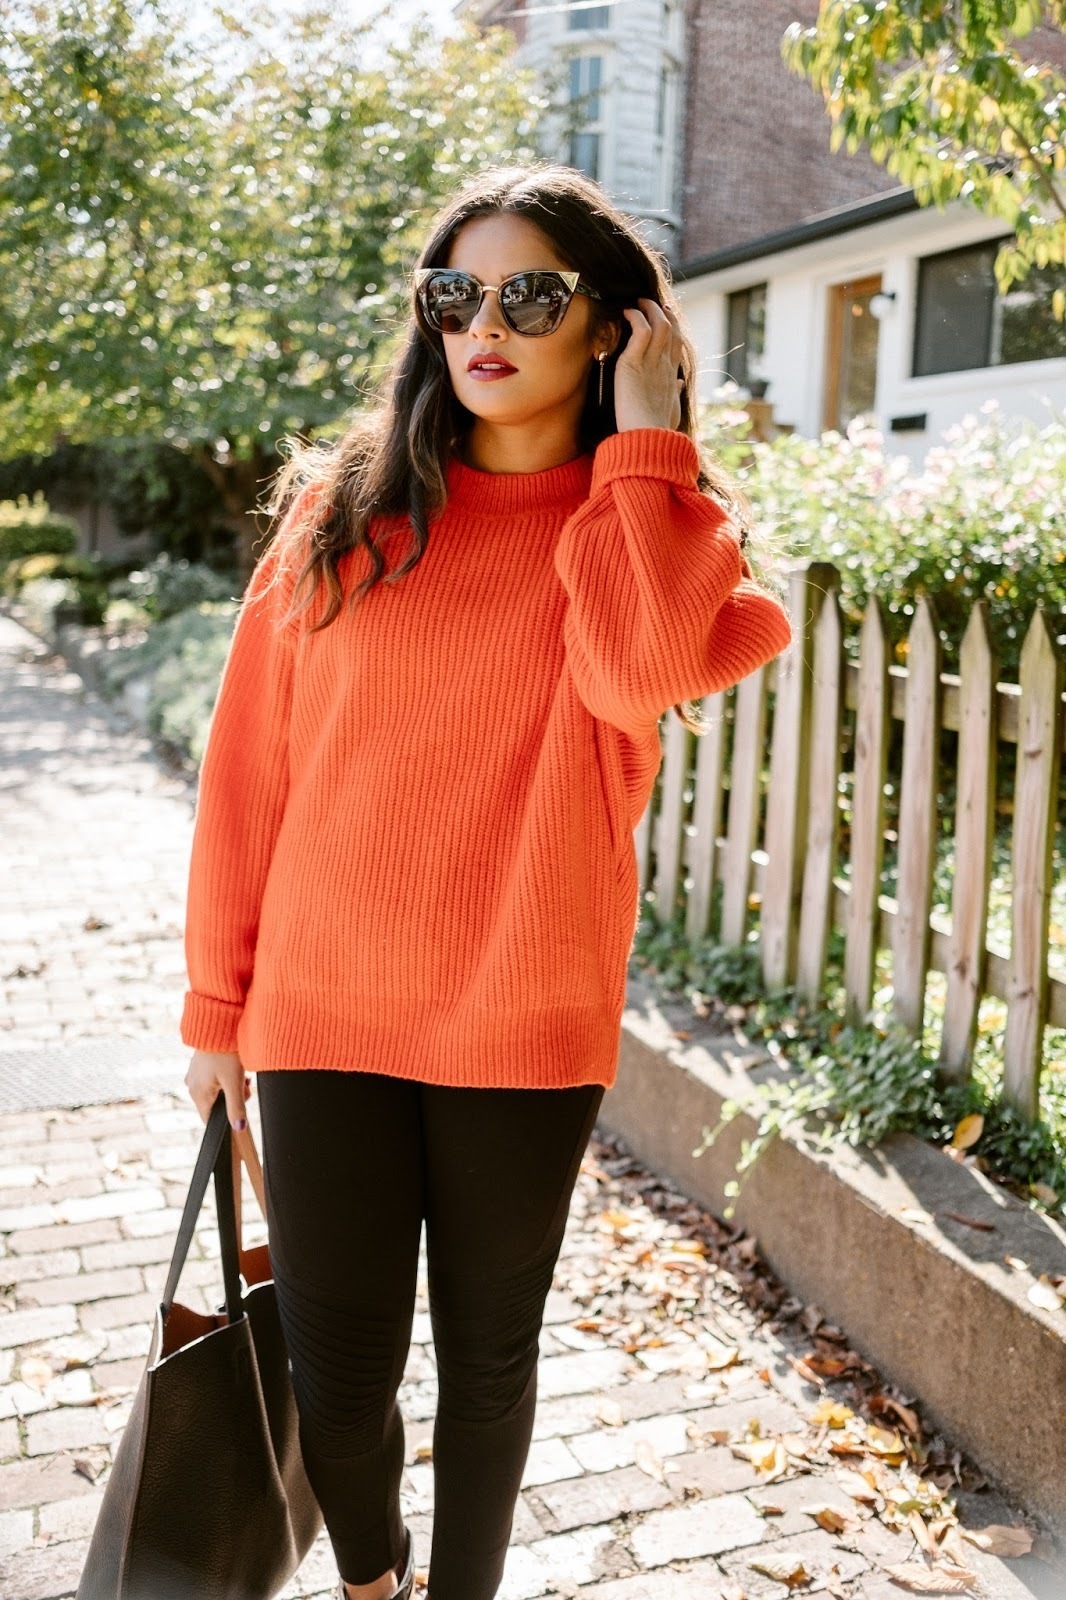 Women's Orange Knit Cable Sweater, Black Leggings, Black Leather Tote Bag,  Black Sunglasses | Lookastic